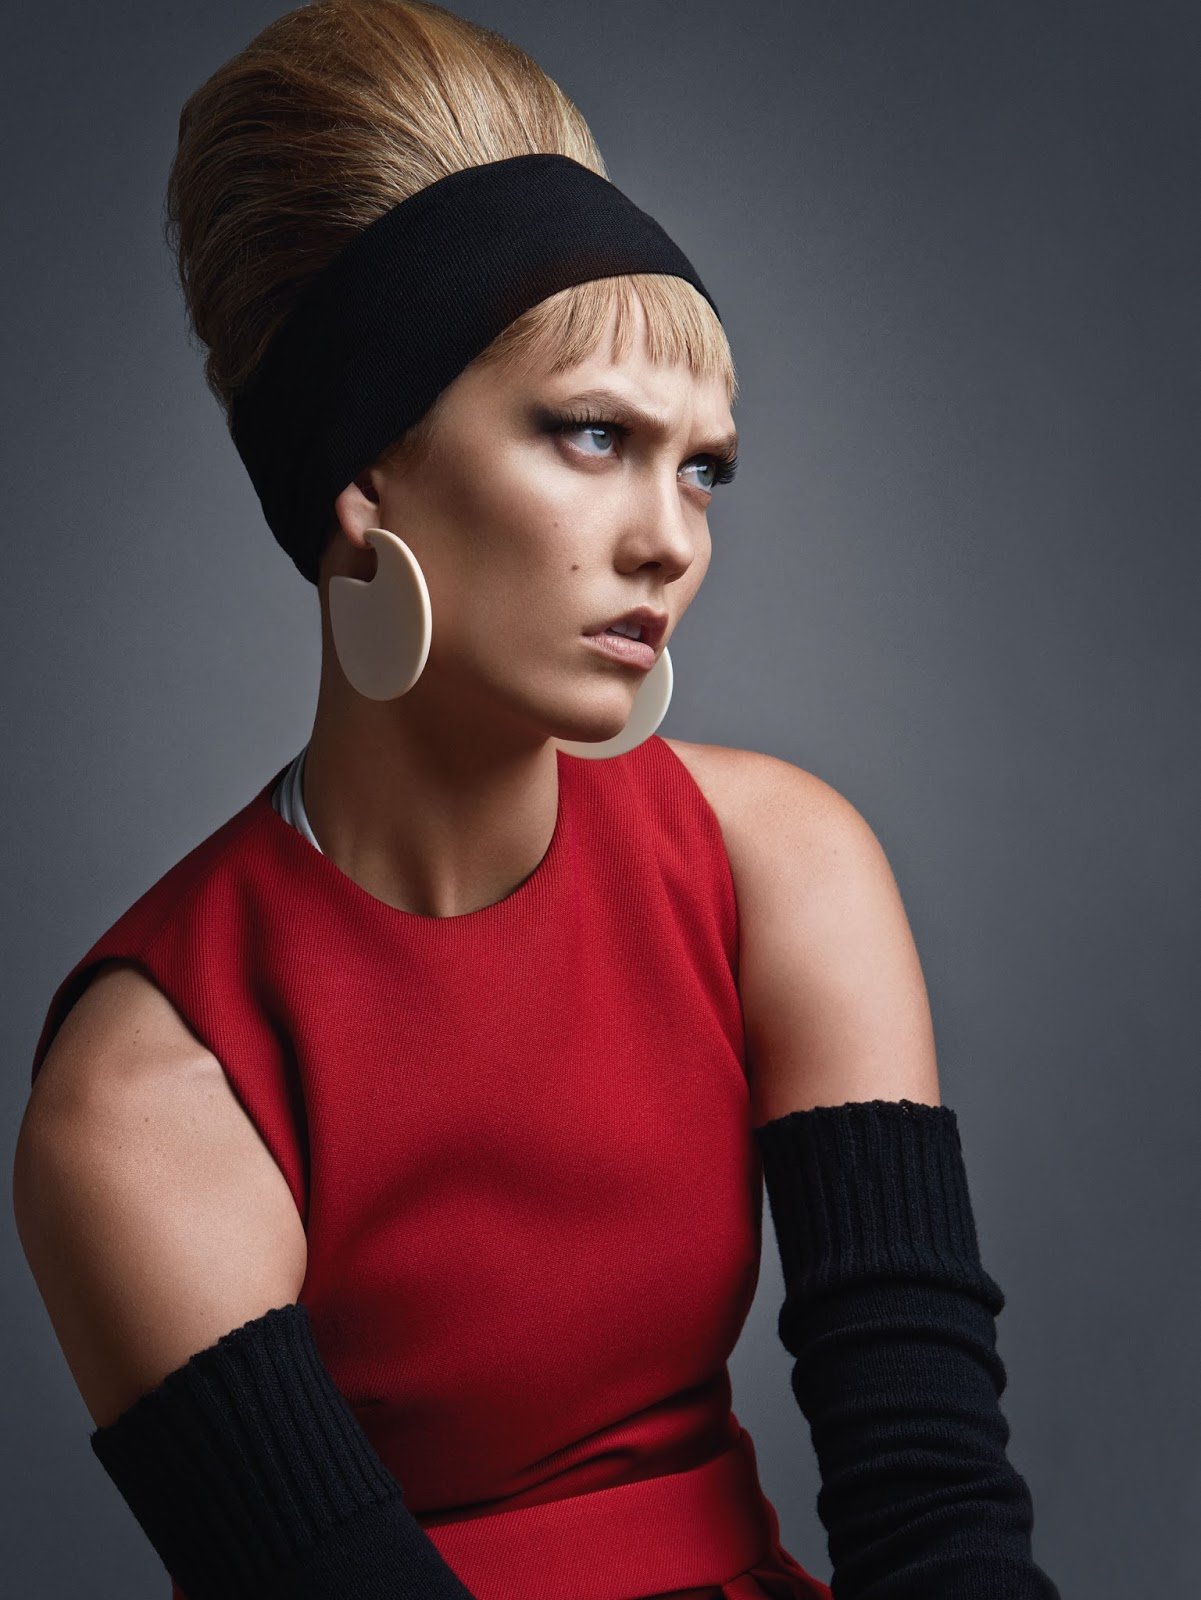 Karlie-Kloss-by-Patrick-Demarchelier-for-Vogue-UK-November-2015-11.jpg